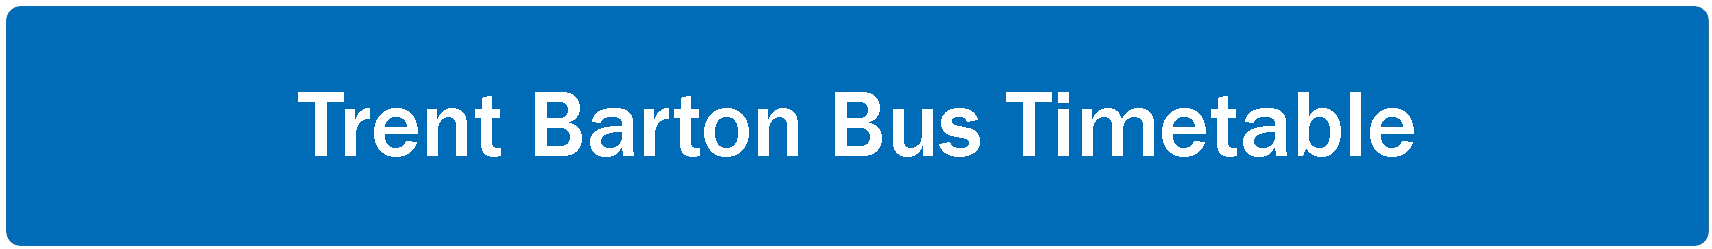 Trent Barton Bus Timetable